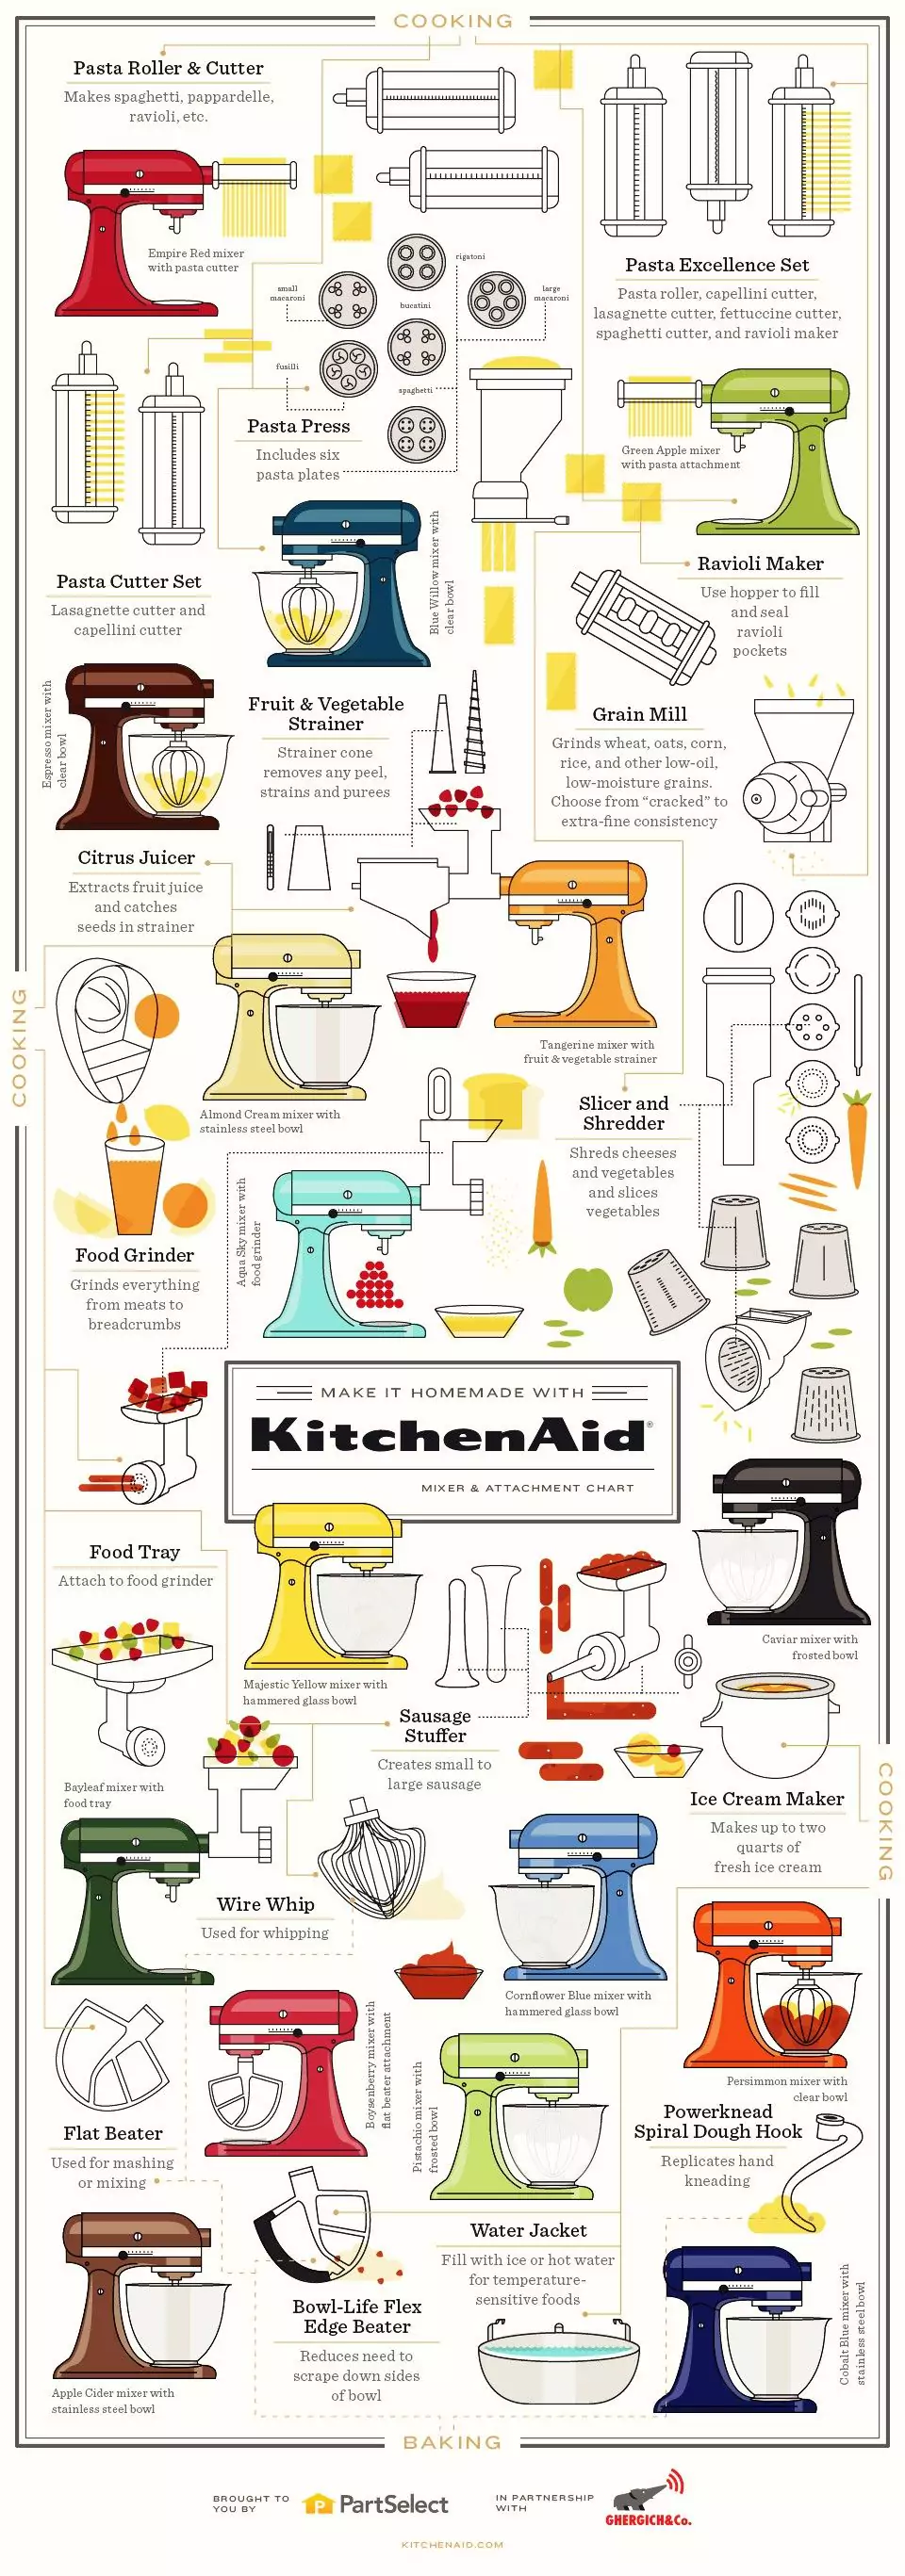 Make It Homemade With KitchenAid